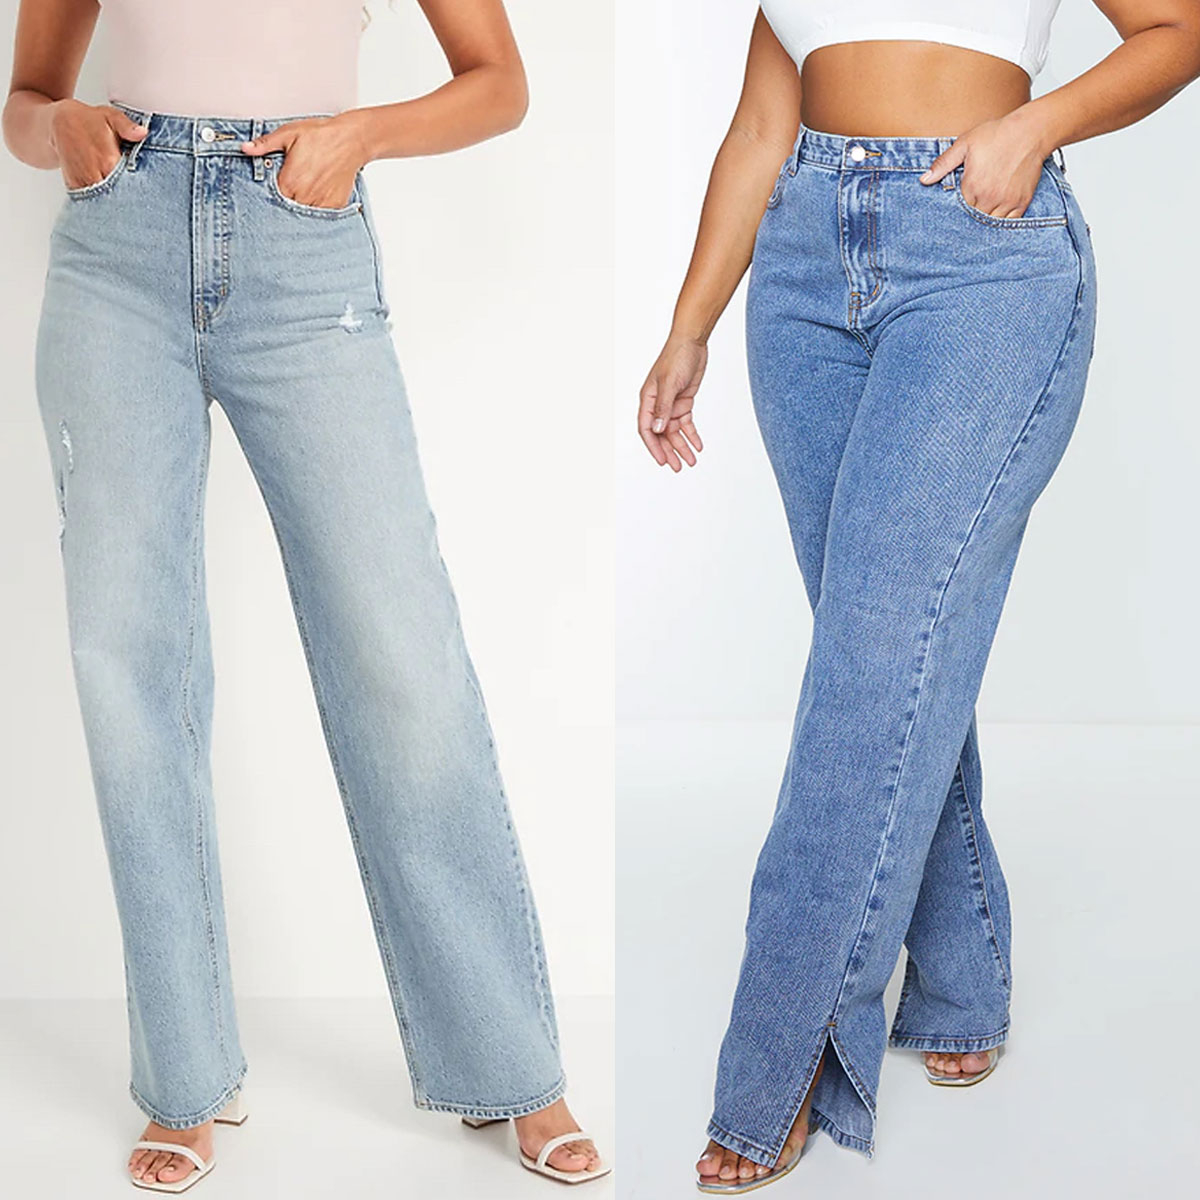 Verst schudden Afslachten Shop the Best Under $60 Denim Jeans From Levi's, Abercrombie & More - E!  Online